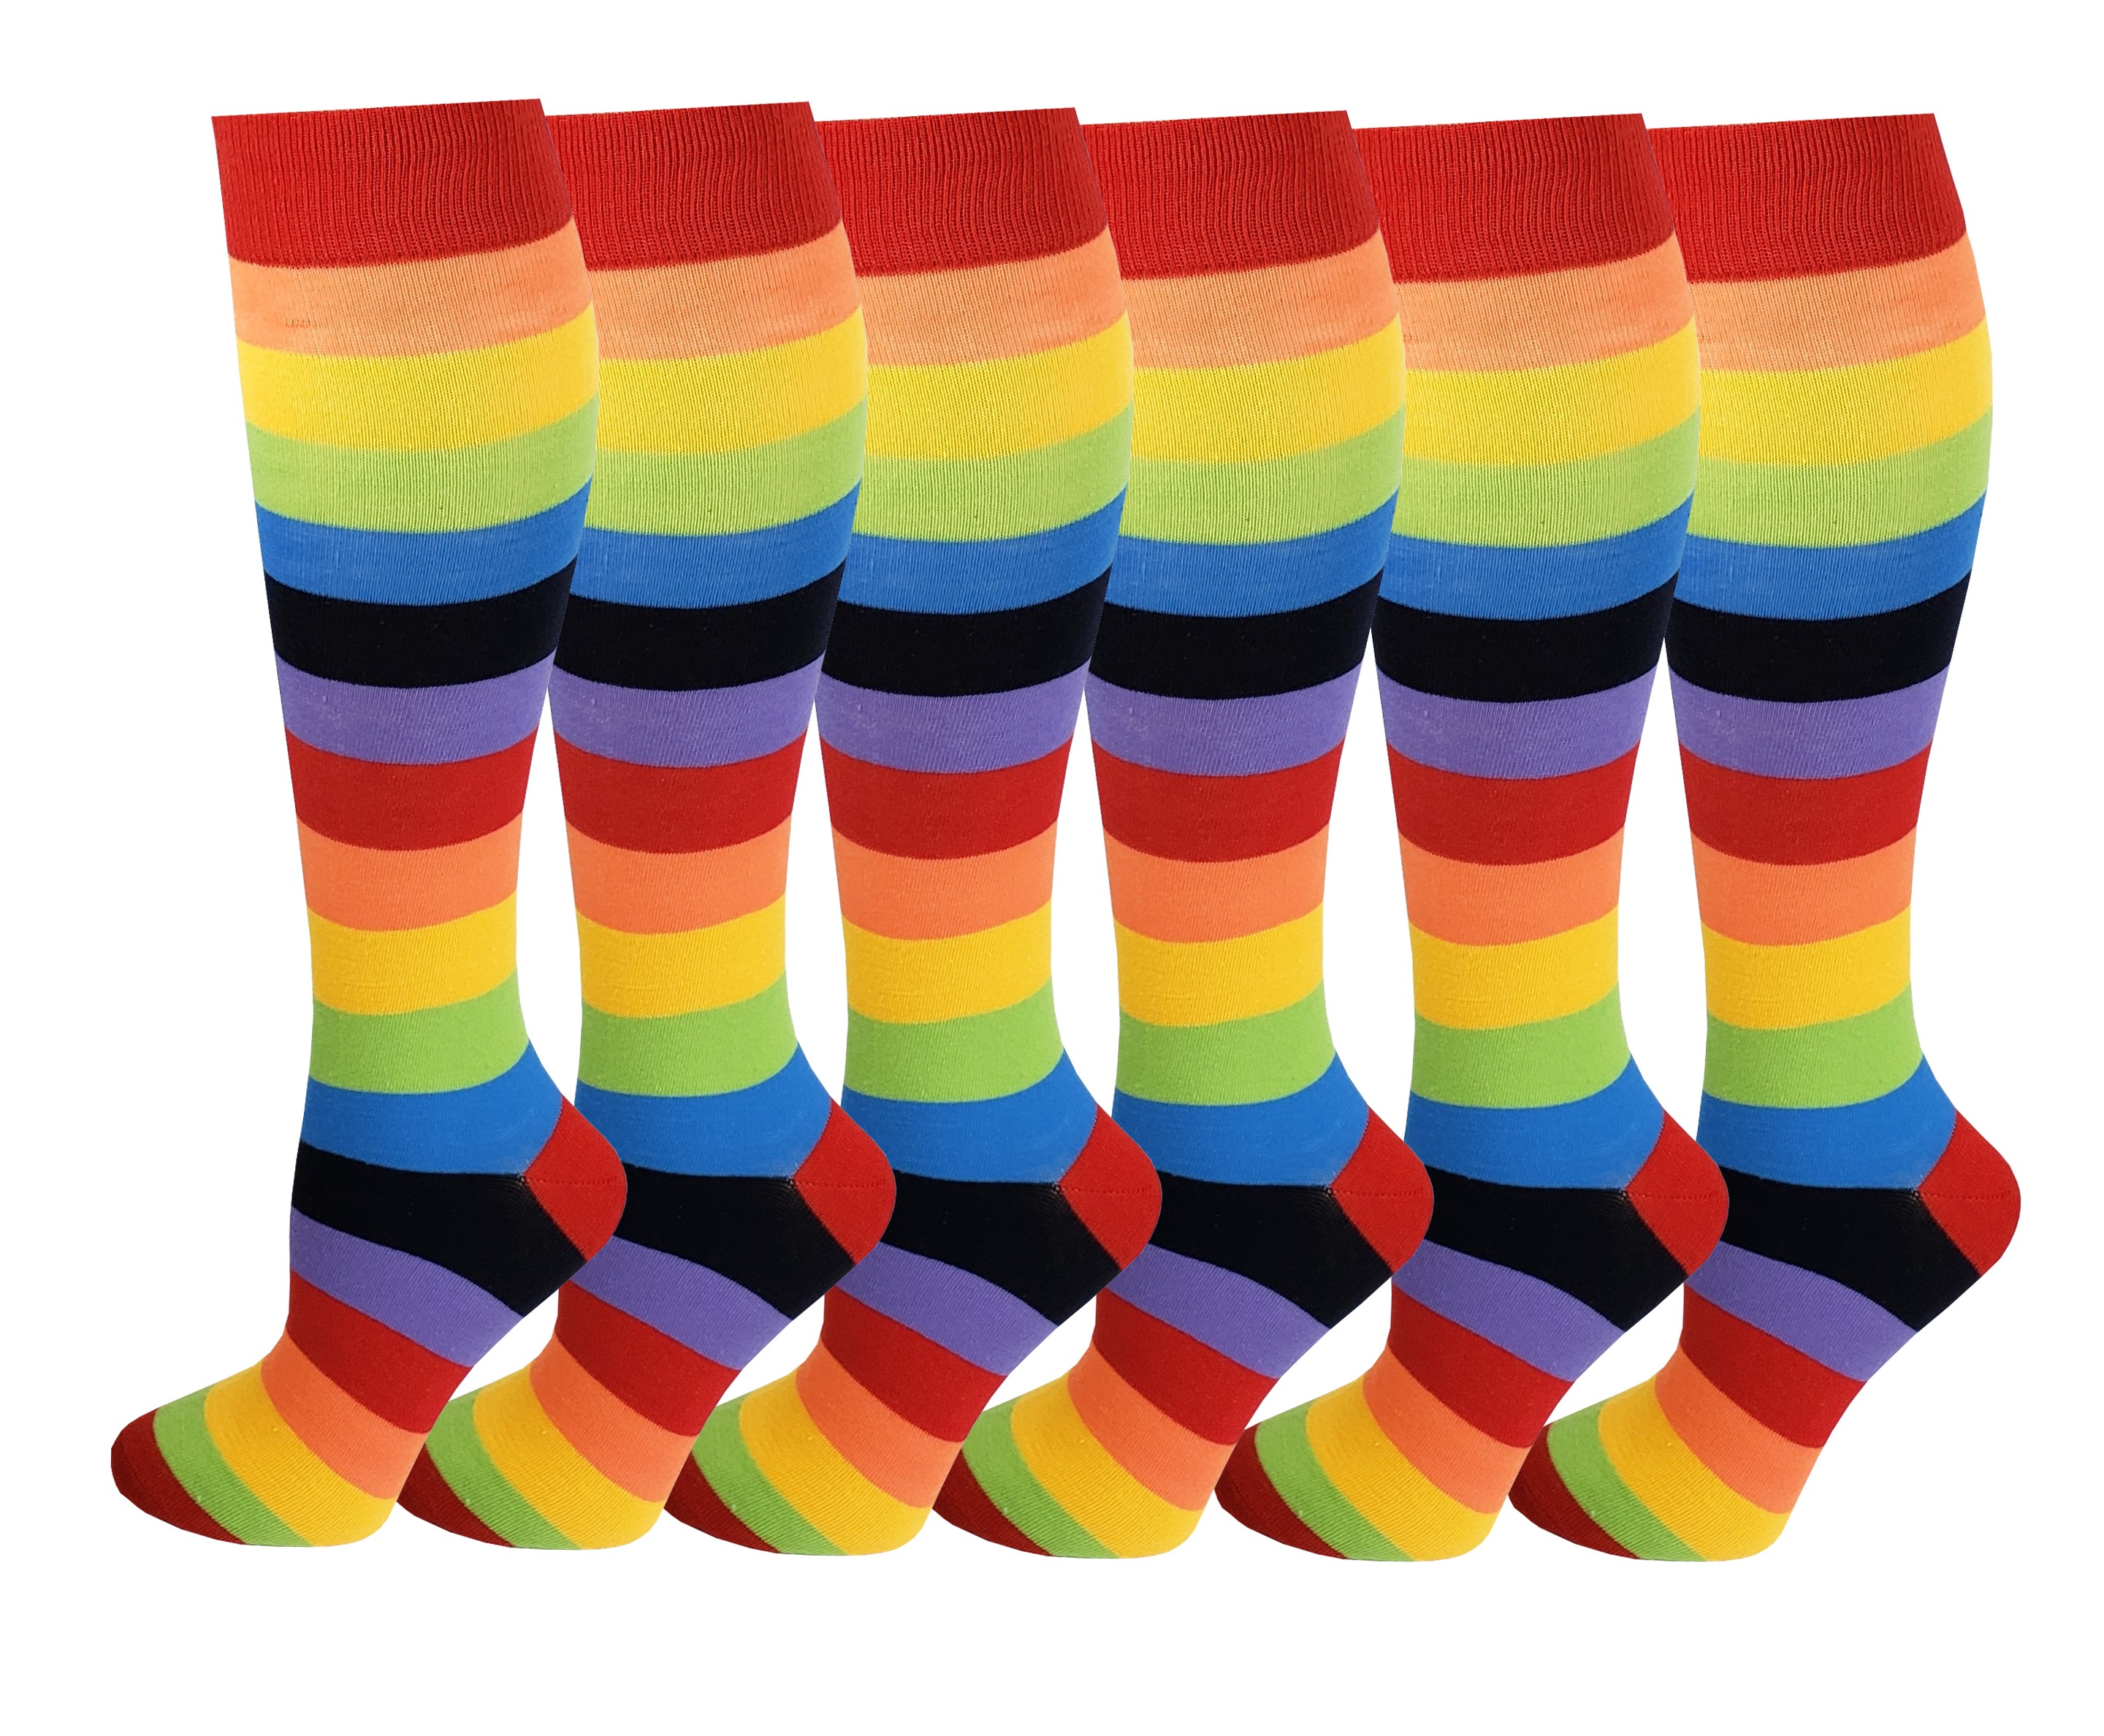 Sumona 6 Pairs Pack Women Rainbow Stripes Knee High Socks - image 1 of 2